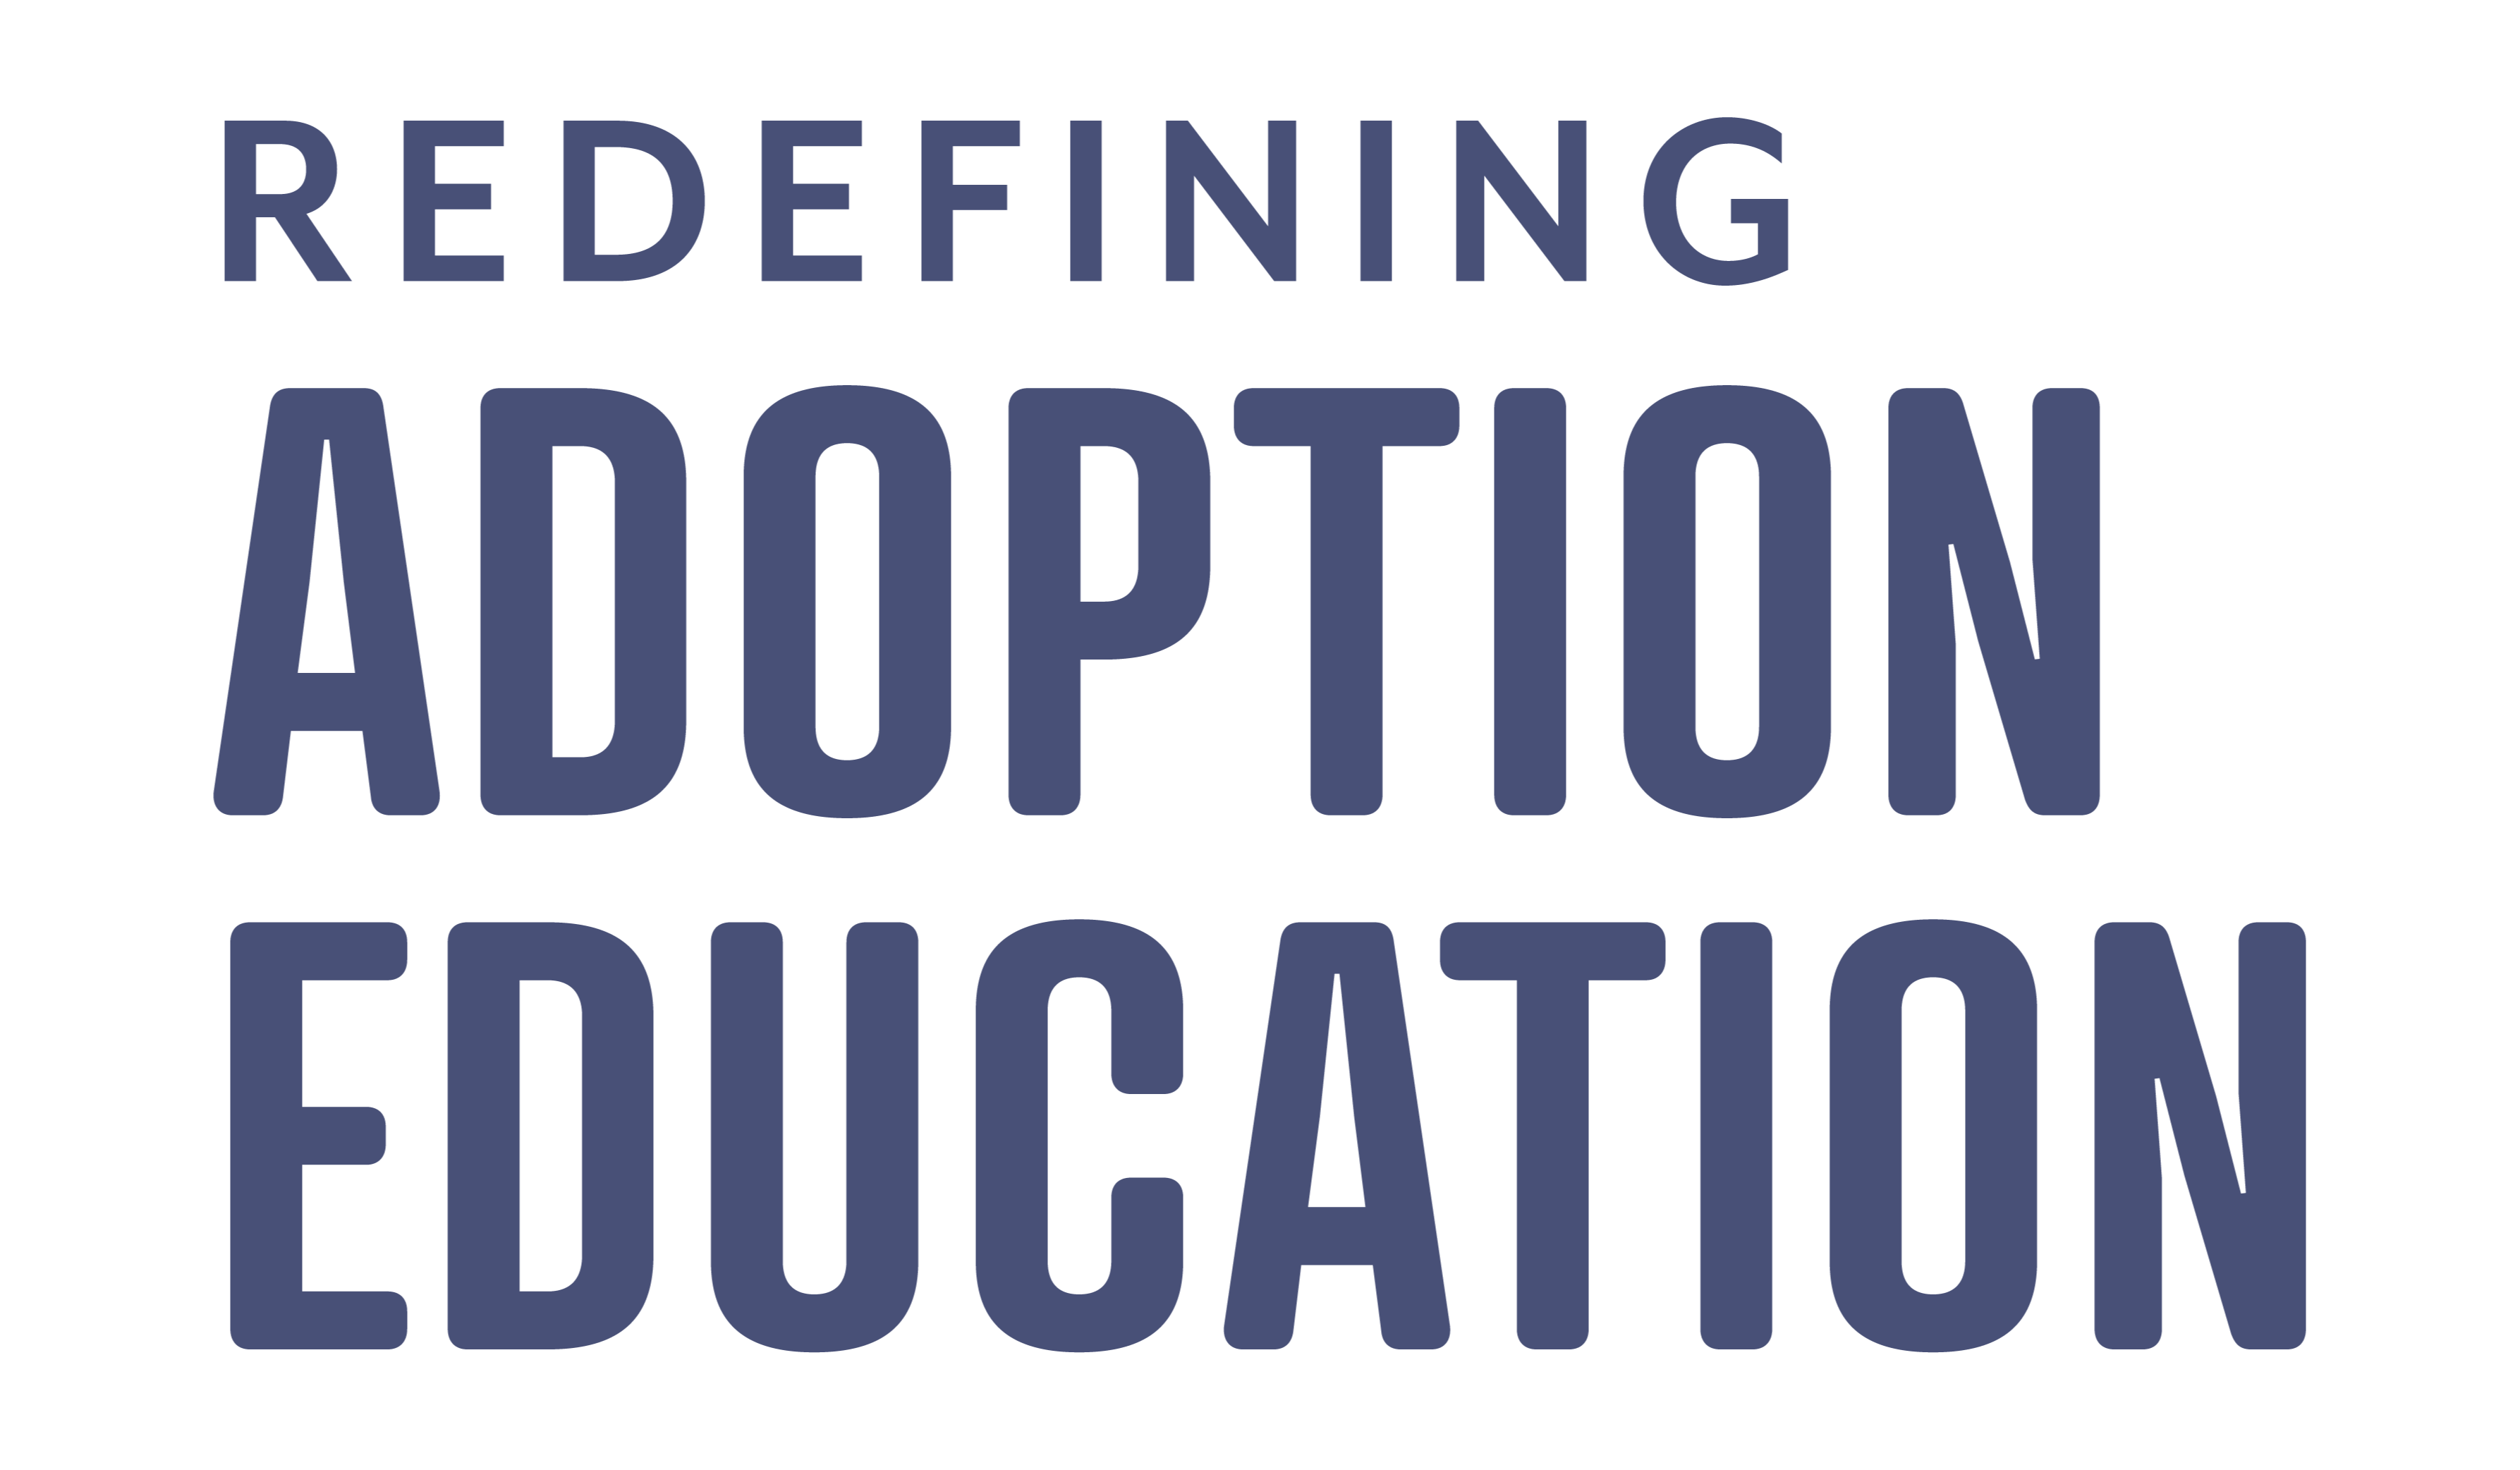 Redefining Adoption Education